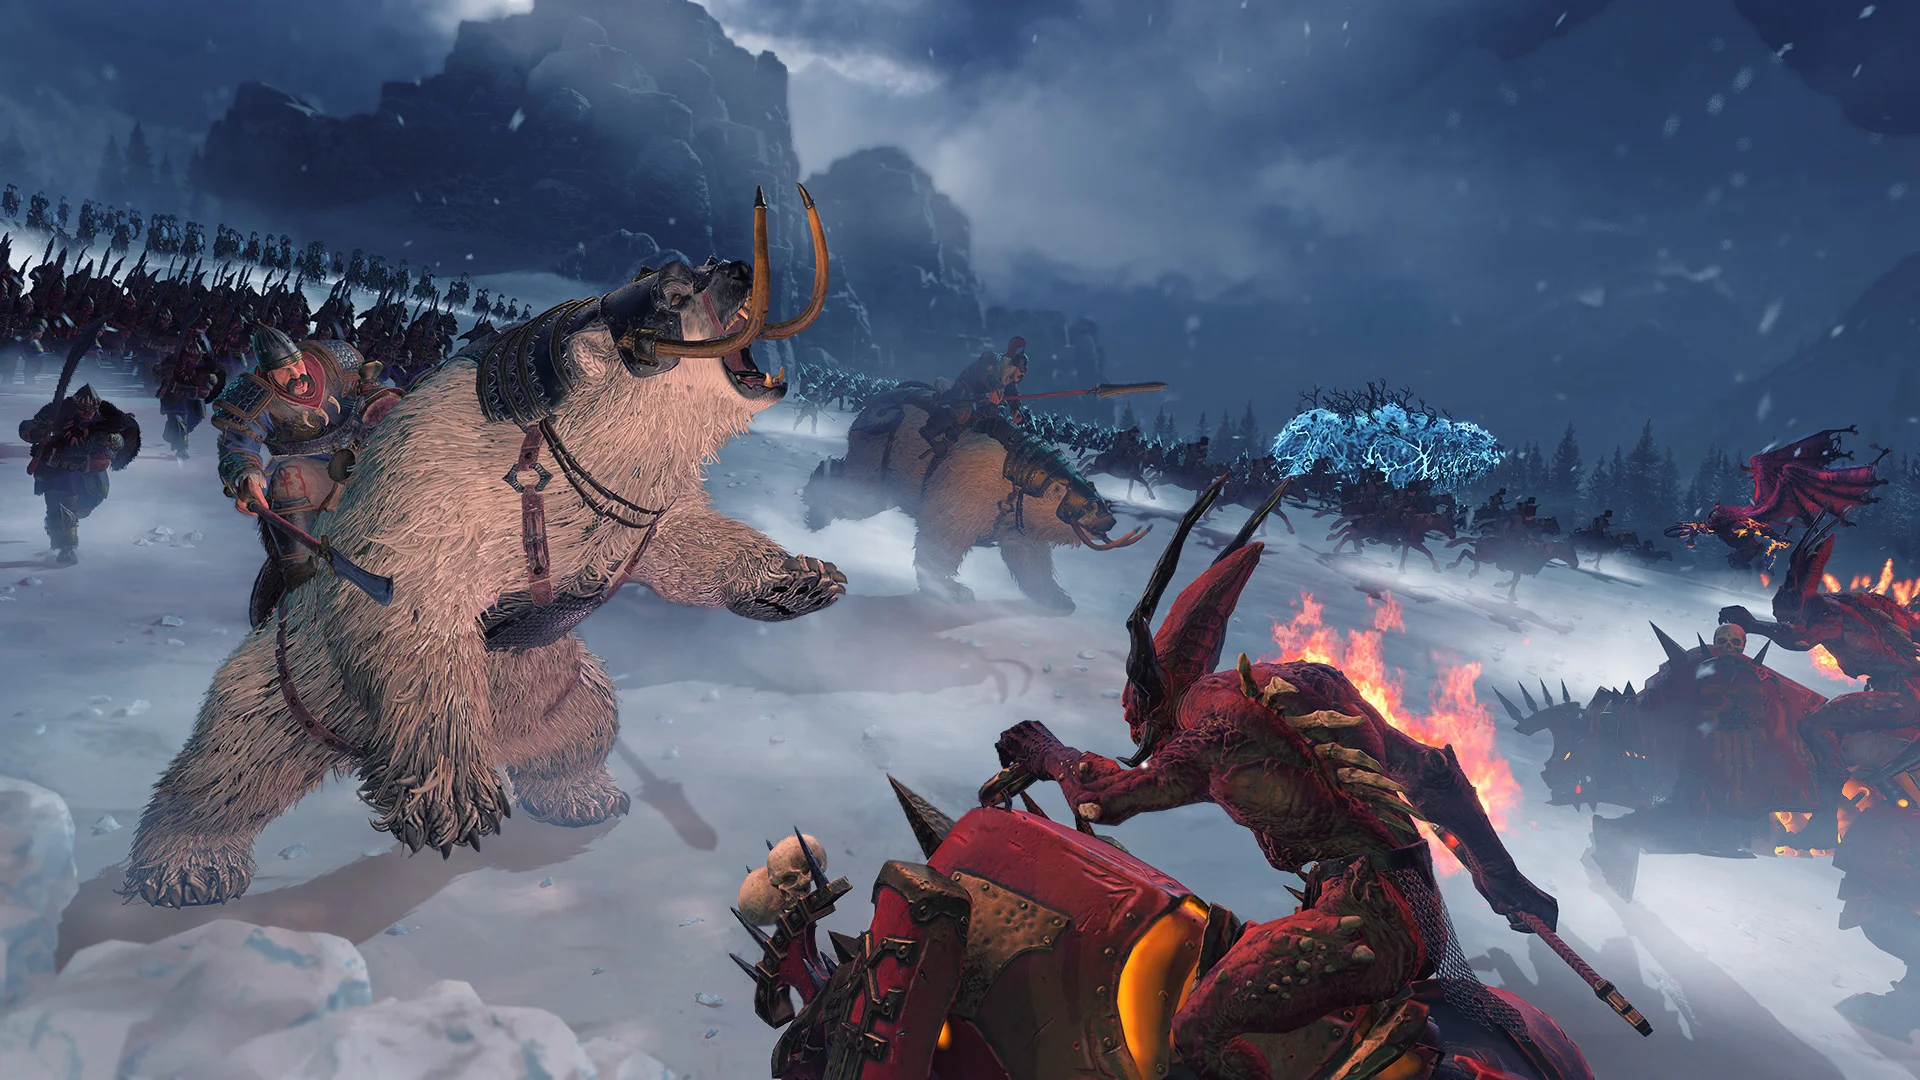 Критики тепло встретили Total War: Warhammer III — средний балл почти 9 из 10 - фото 1